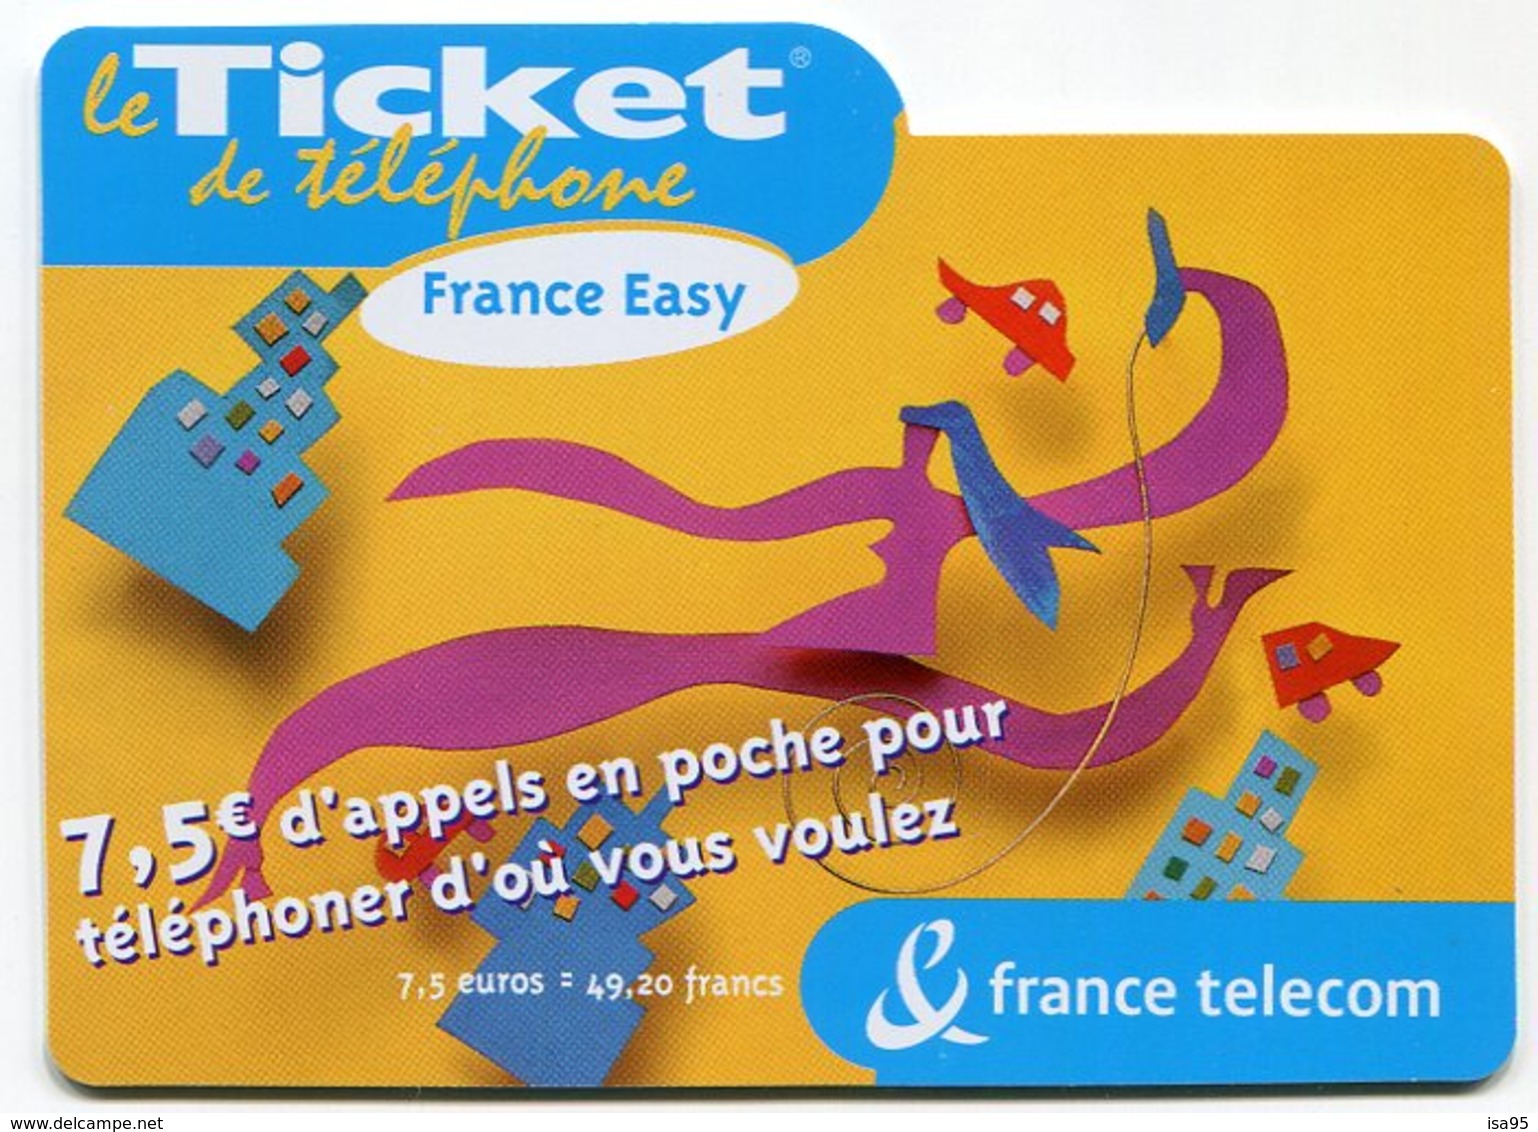 TELECARTE-LE TICKET DE TELEPHONE FRANCE EASY-2004-7.5€ - FT Tickets